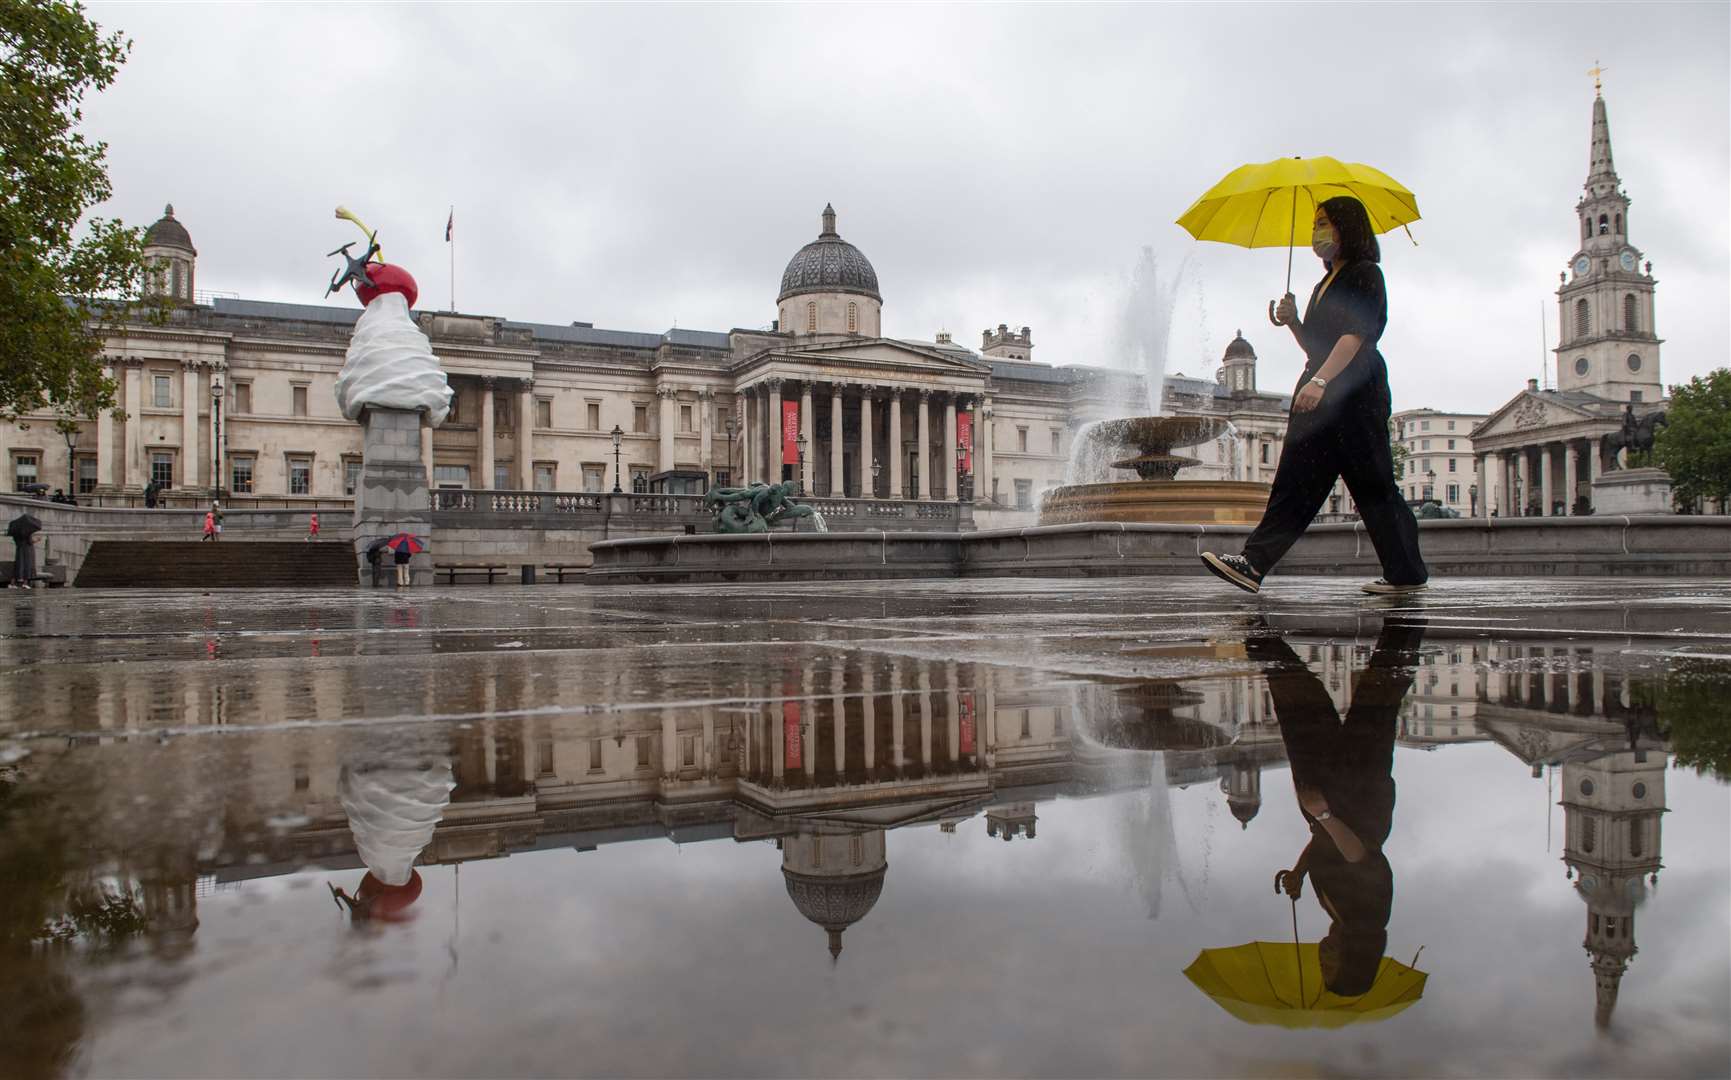 A woman shelters from the rain under an umbrella as she walks through Trafalgar Square, London (Dominic Lipinski/PA)